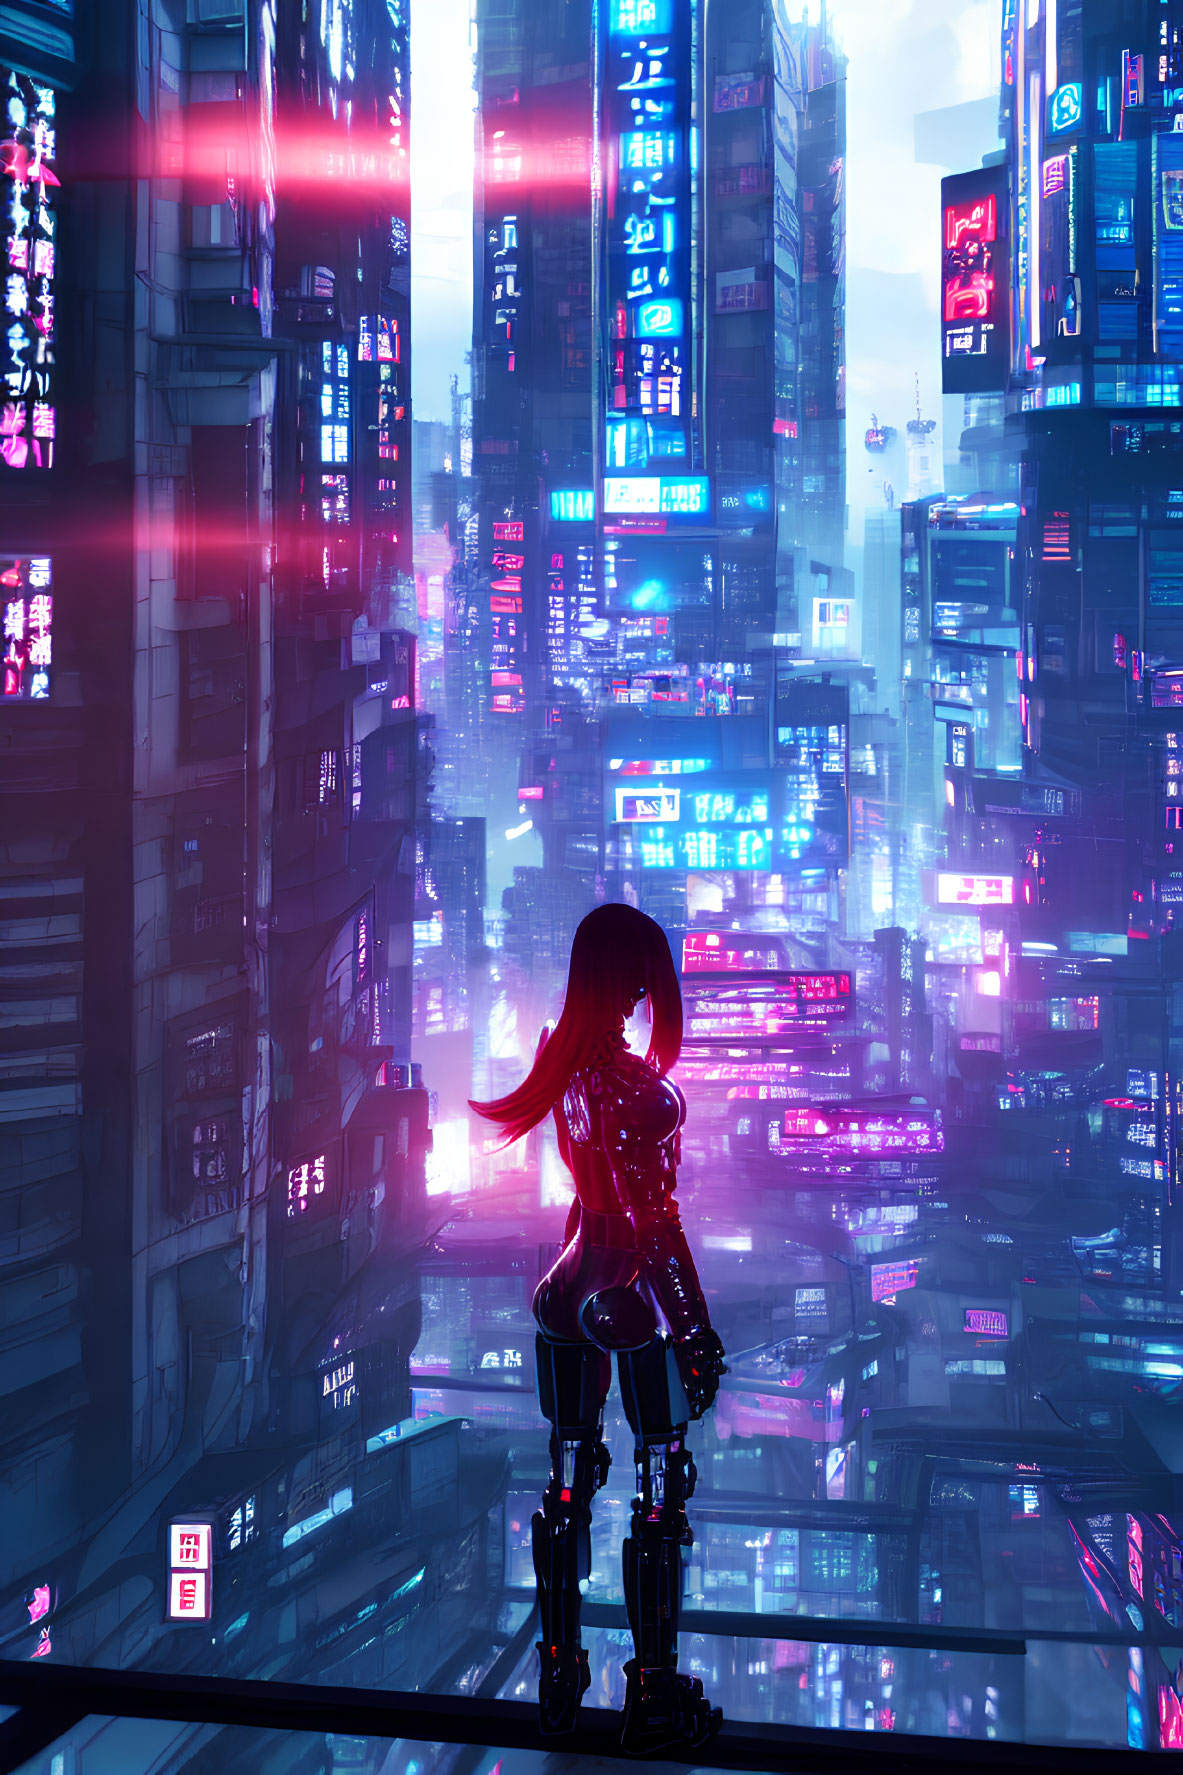 Futuristic suit overlooking neon-lit cityscape at night